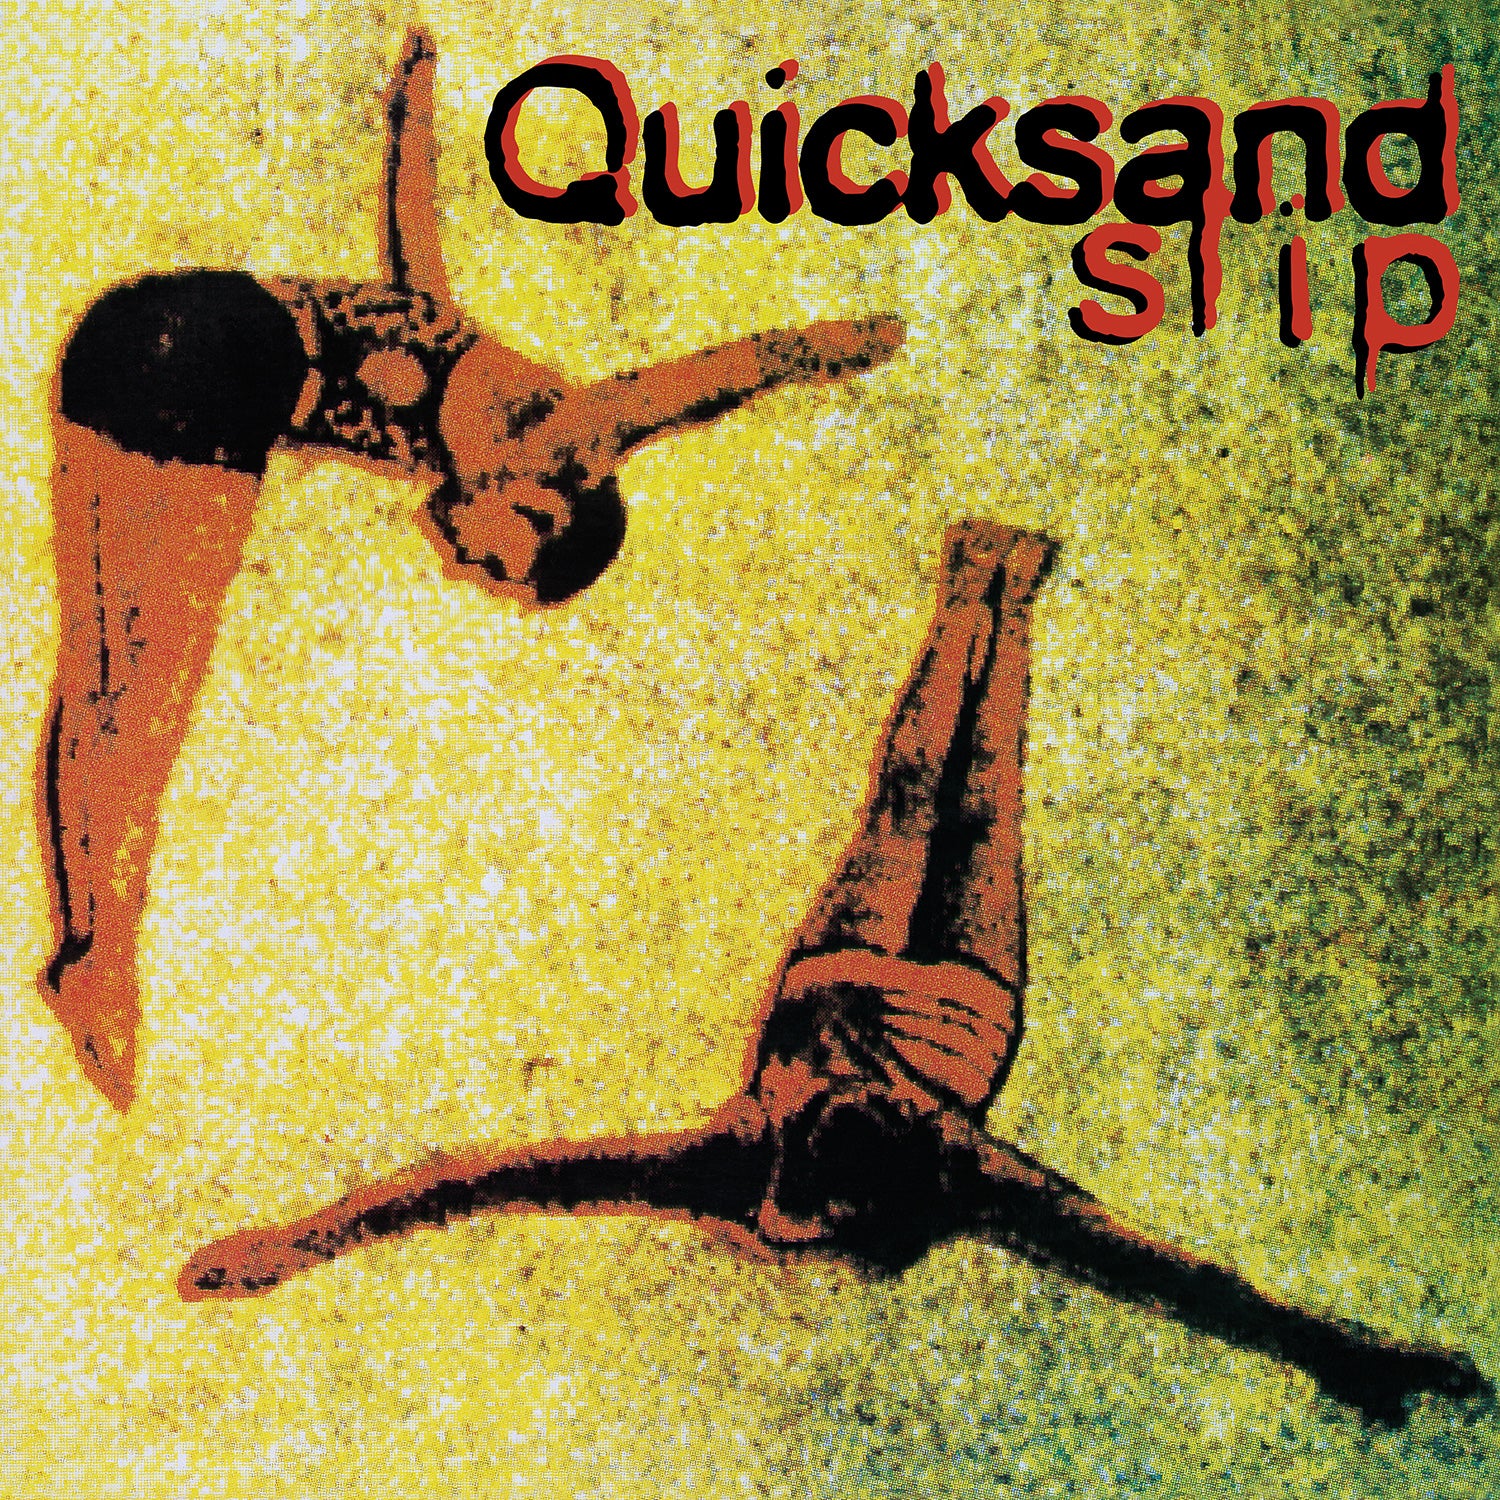 QUICKSAND "Slip - 30th Anniversary" LP